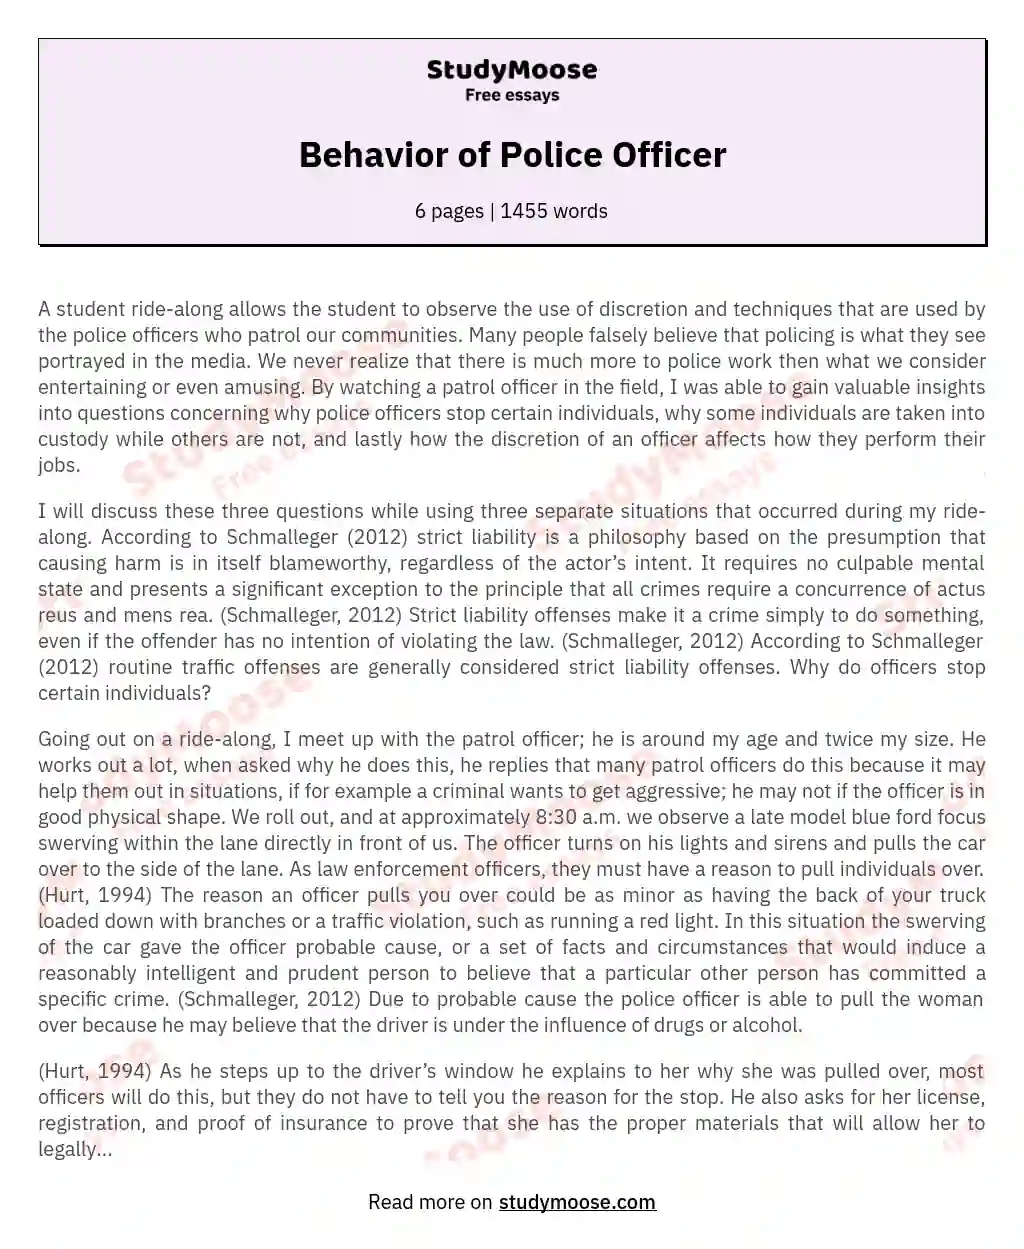 Behavior of Police Officer